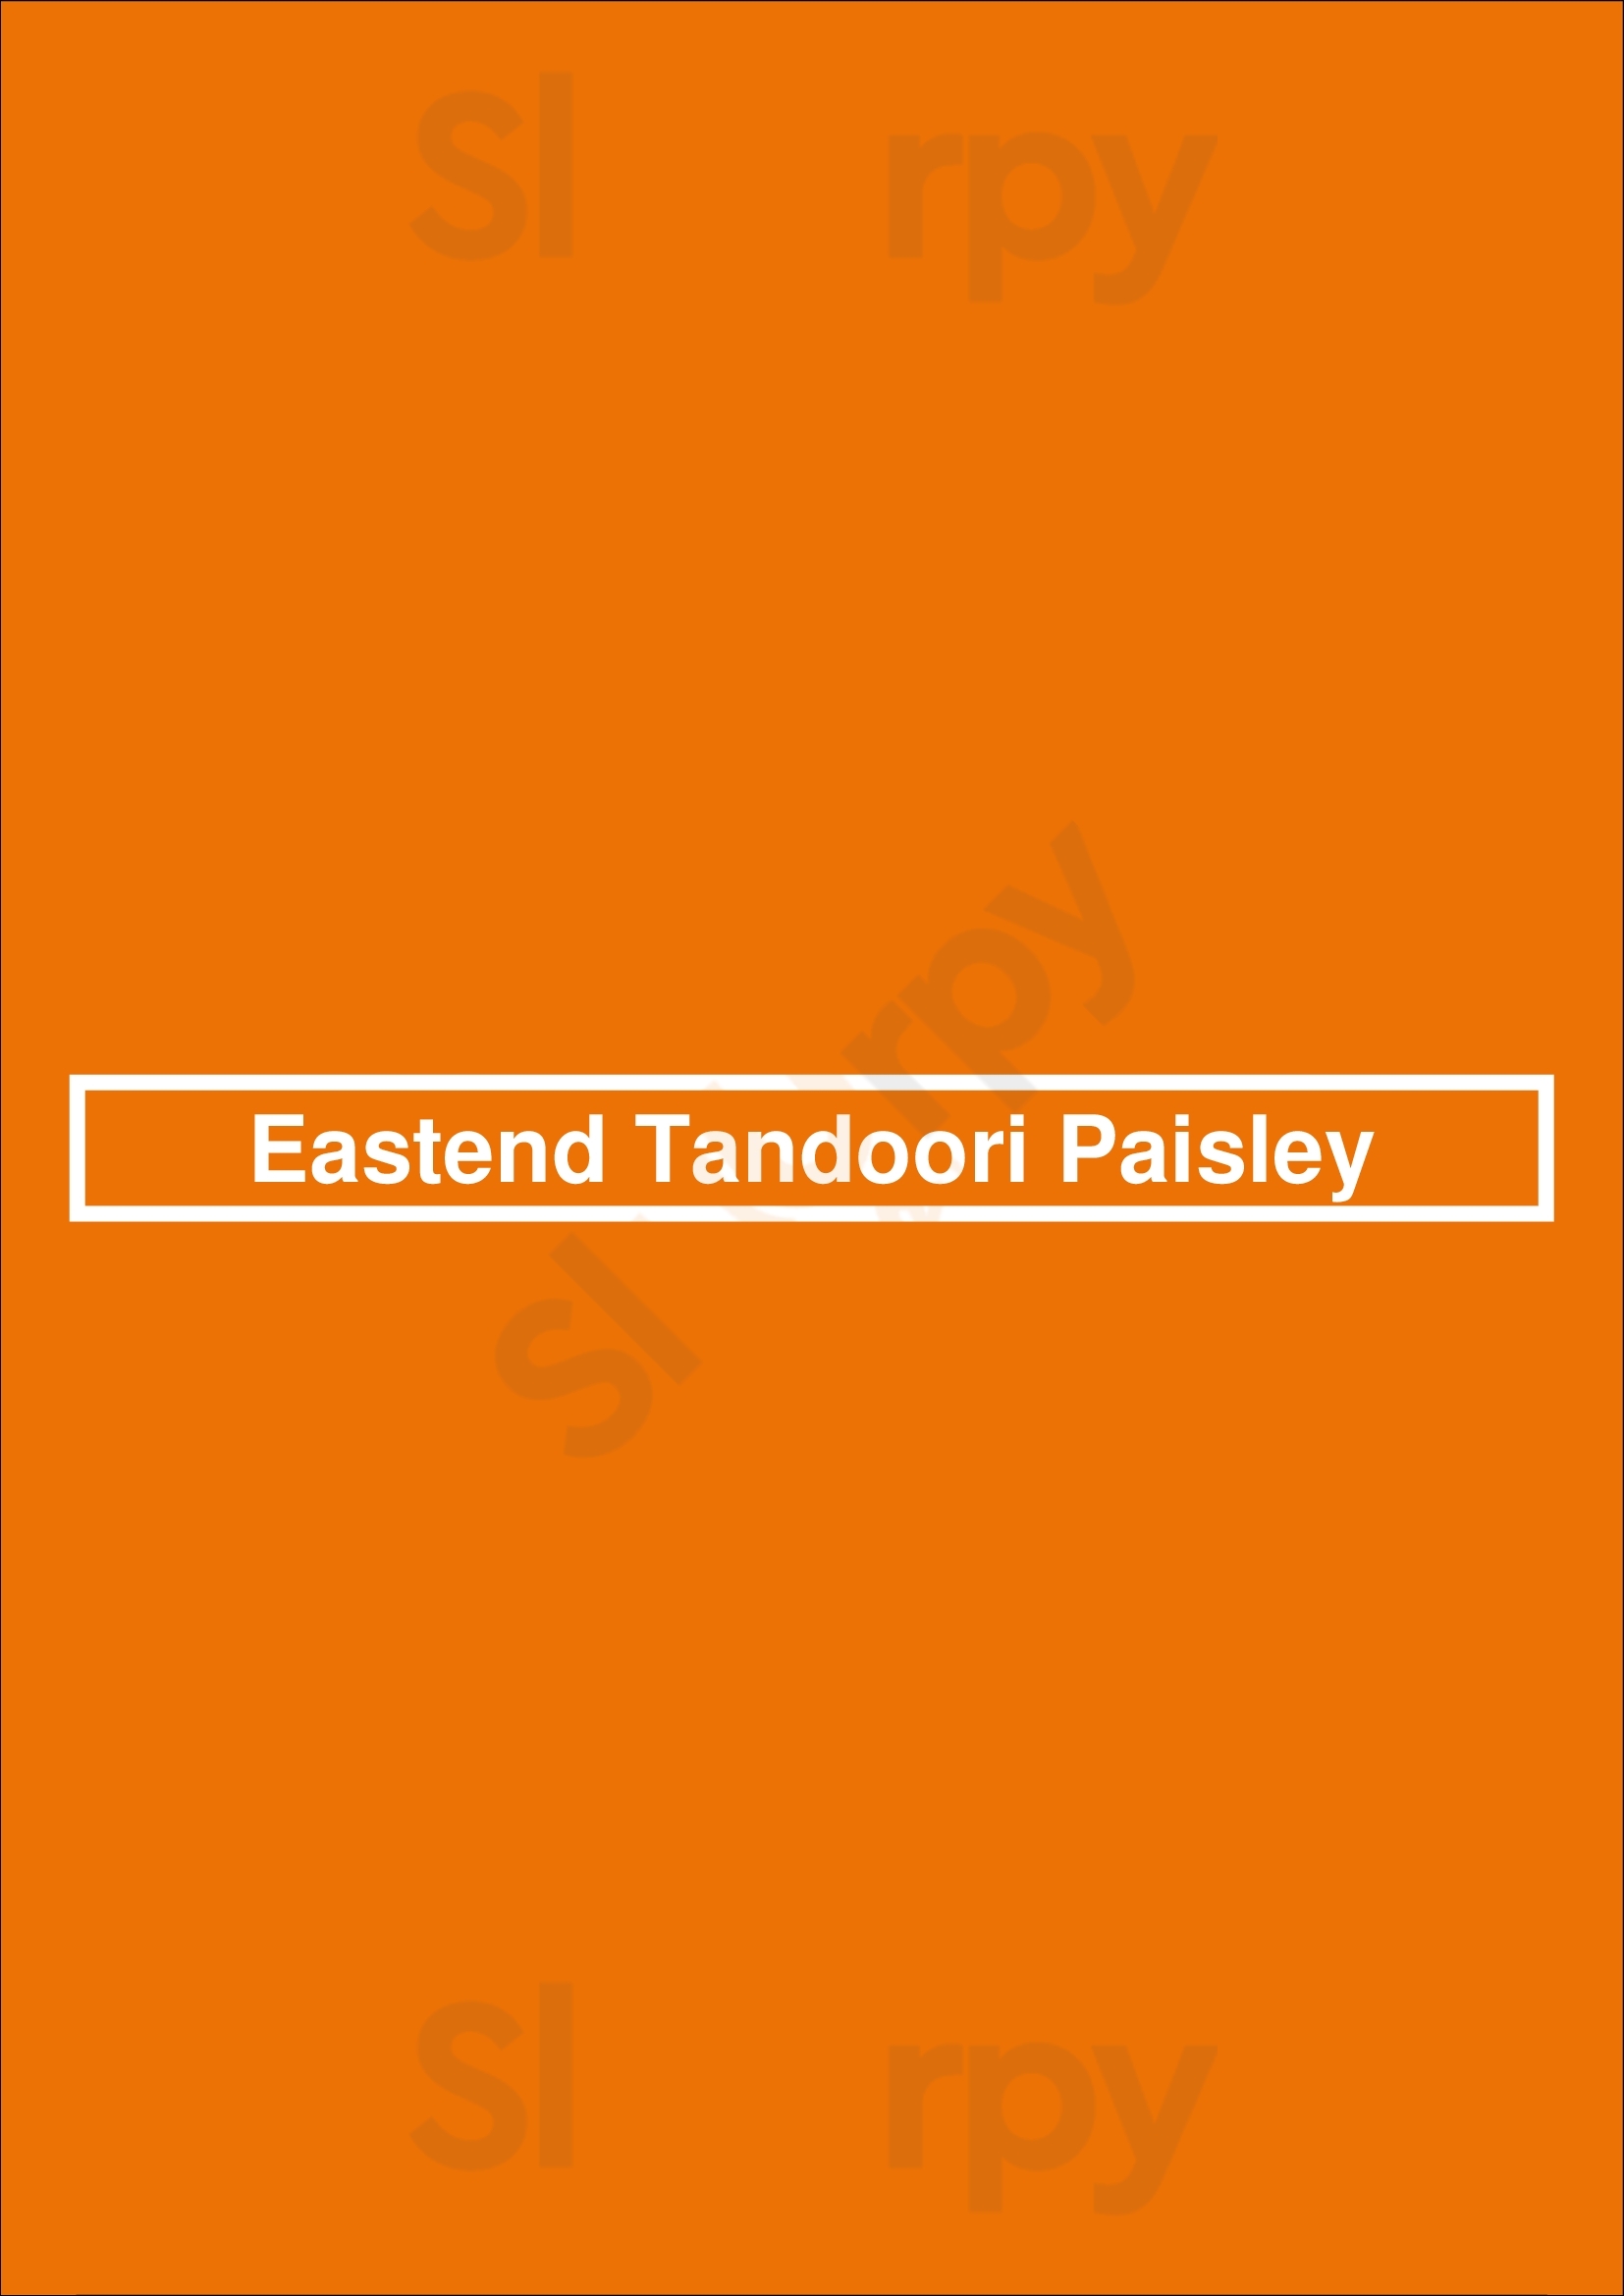 Eastend Tandoori Paisley Paisley Menu - 1